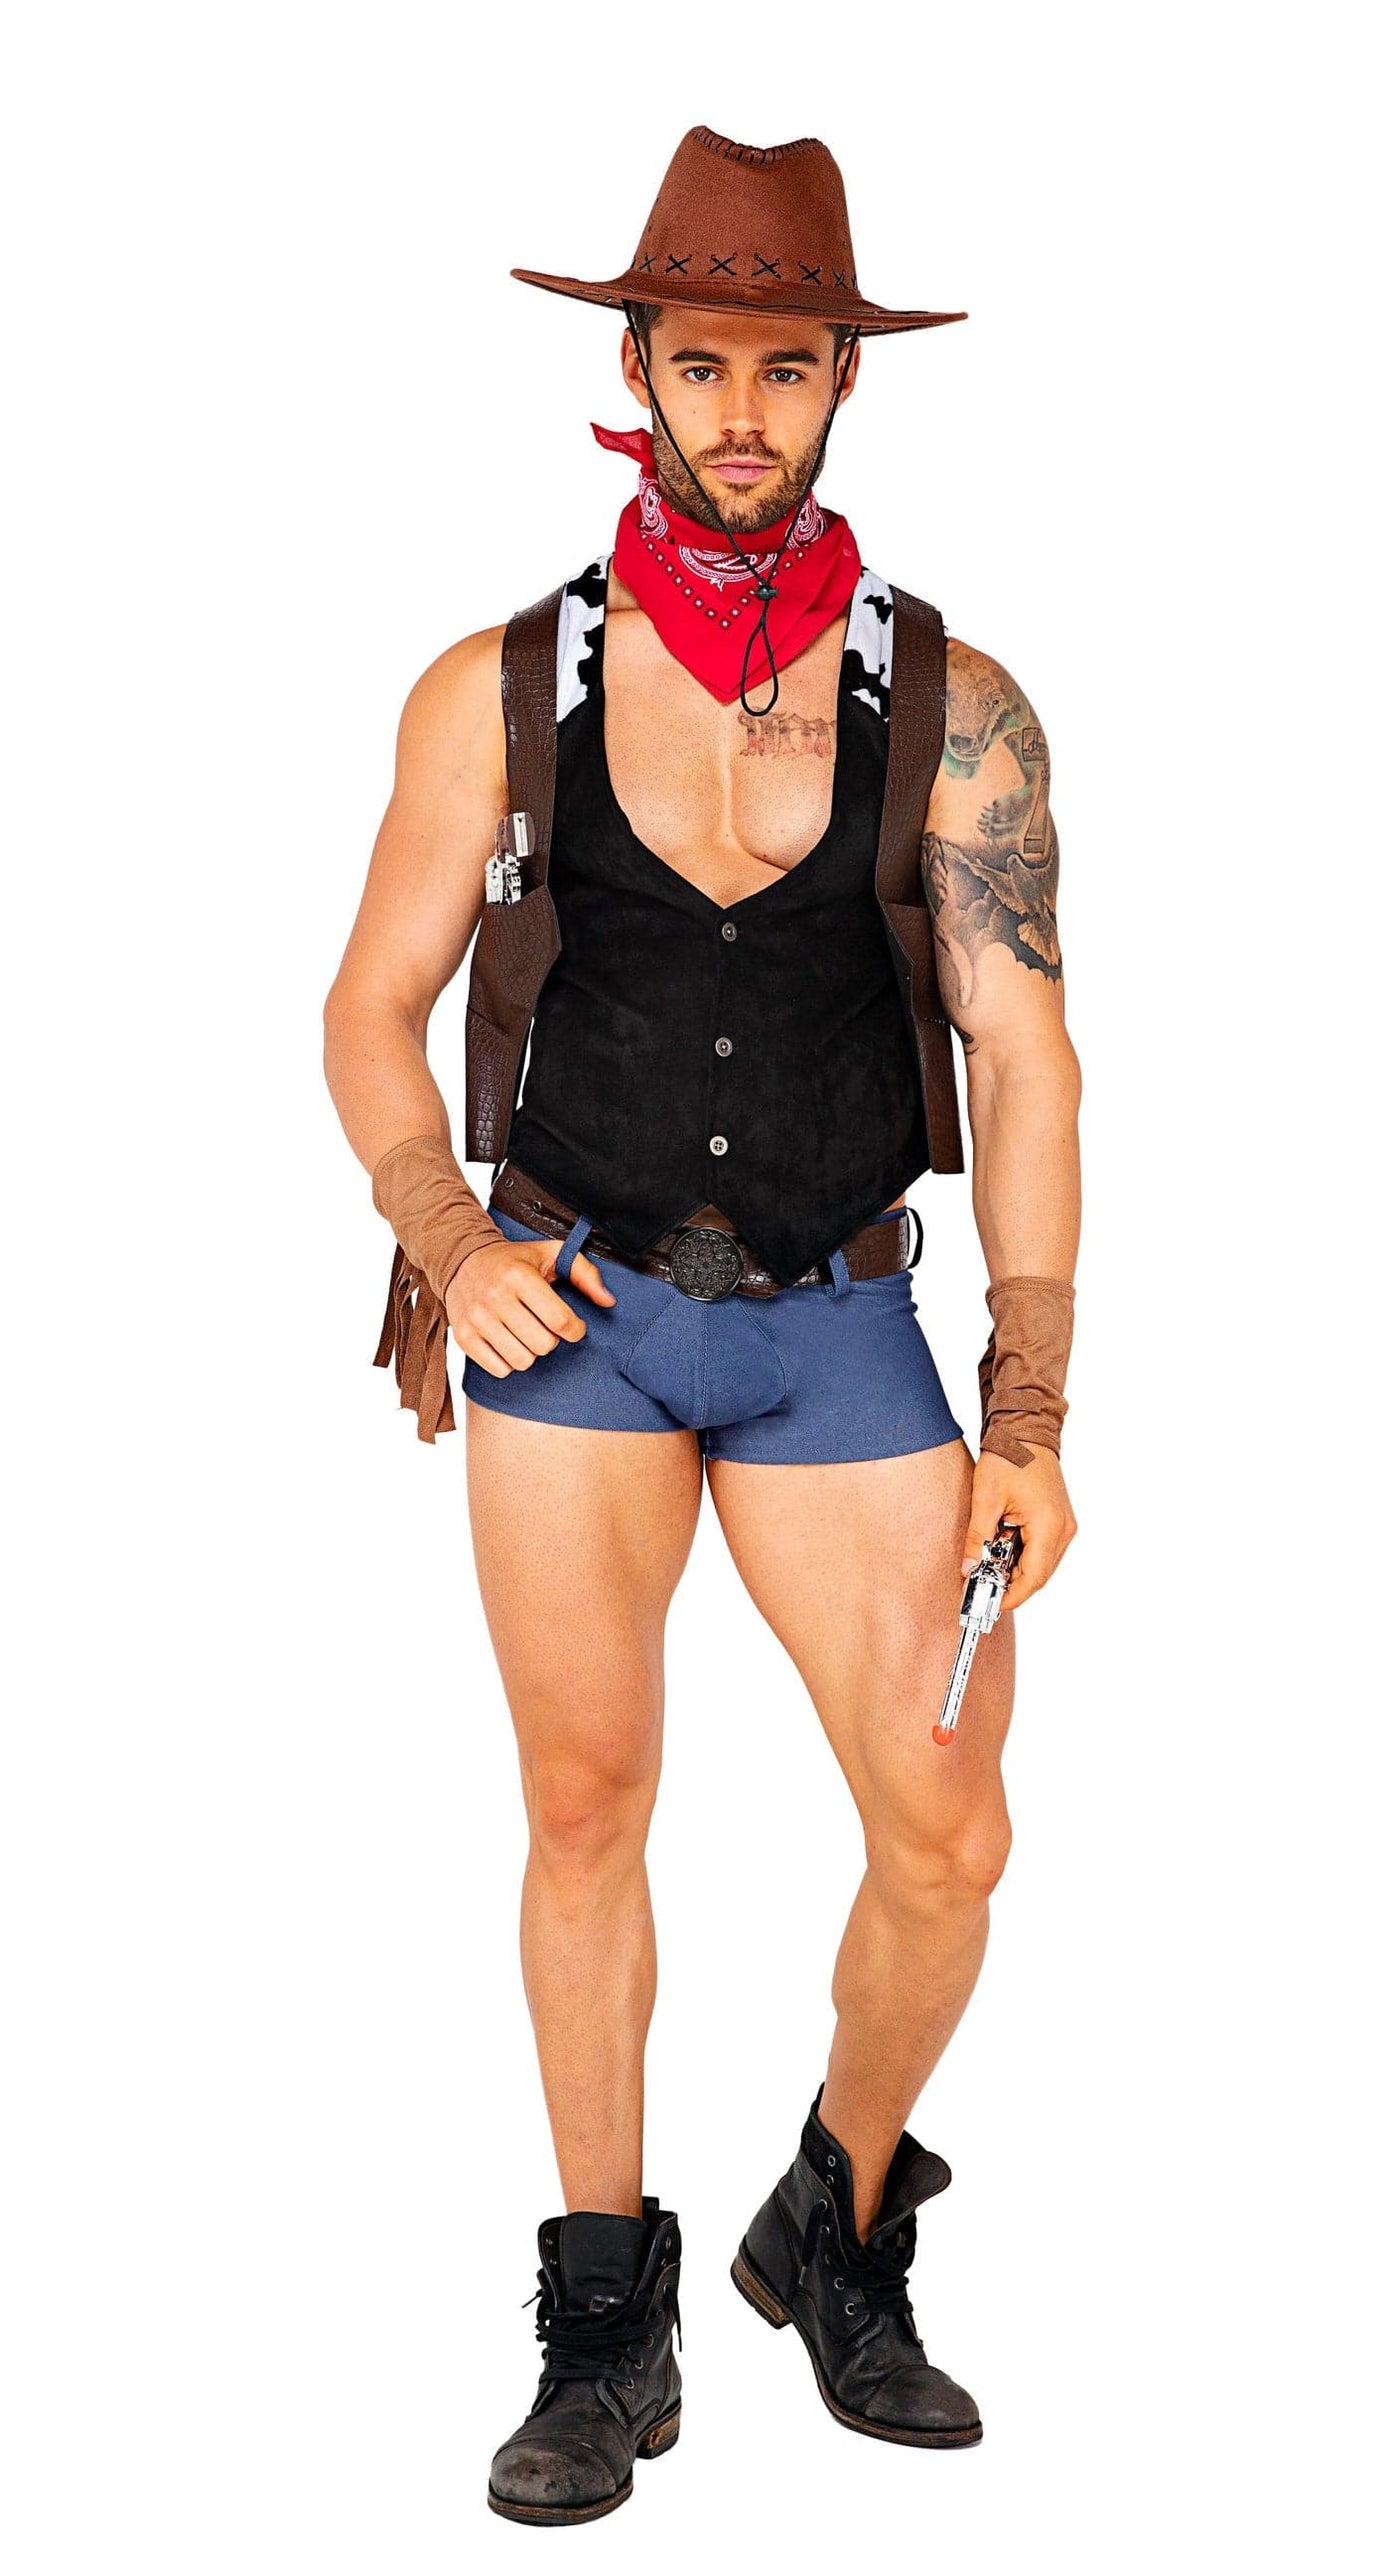 7pc. Showdown Cowboy Men's Costume - For Love of Lingerie